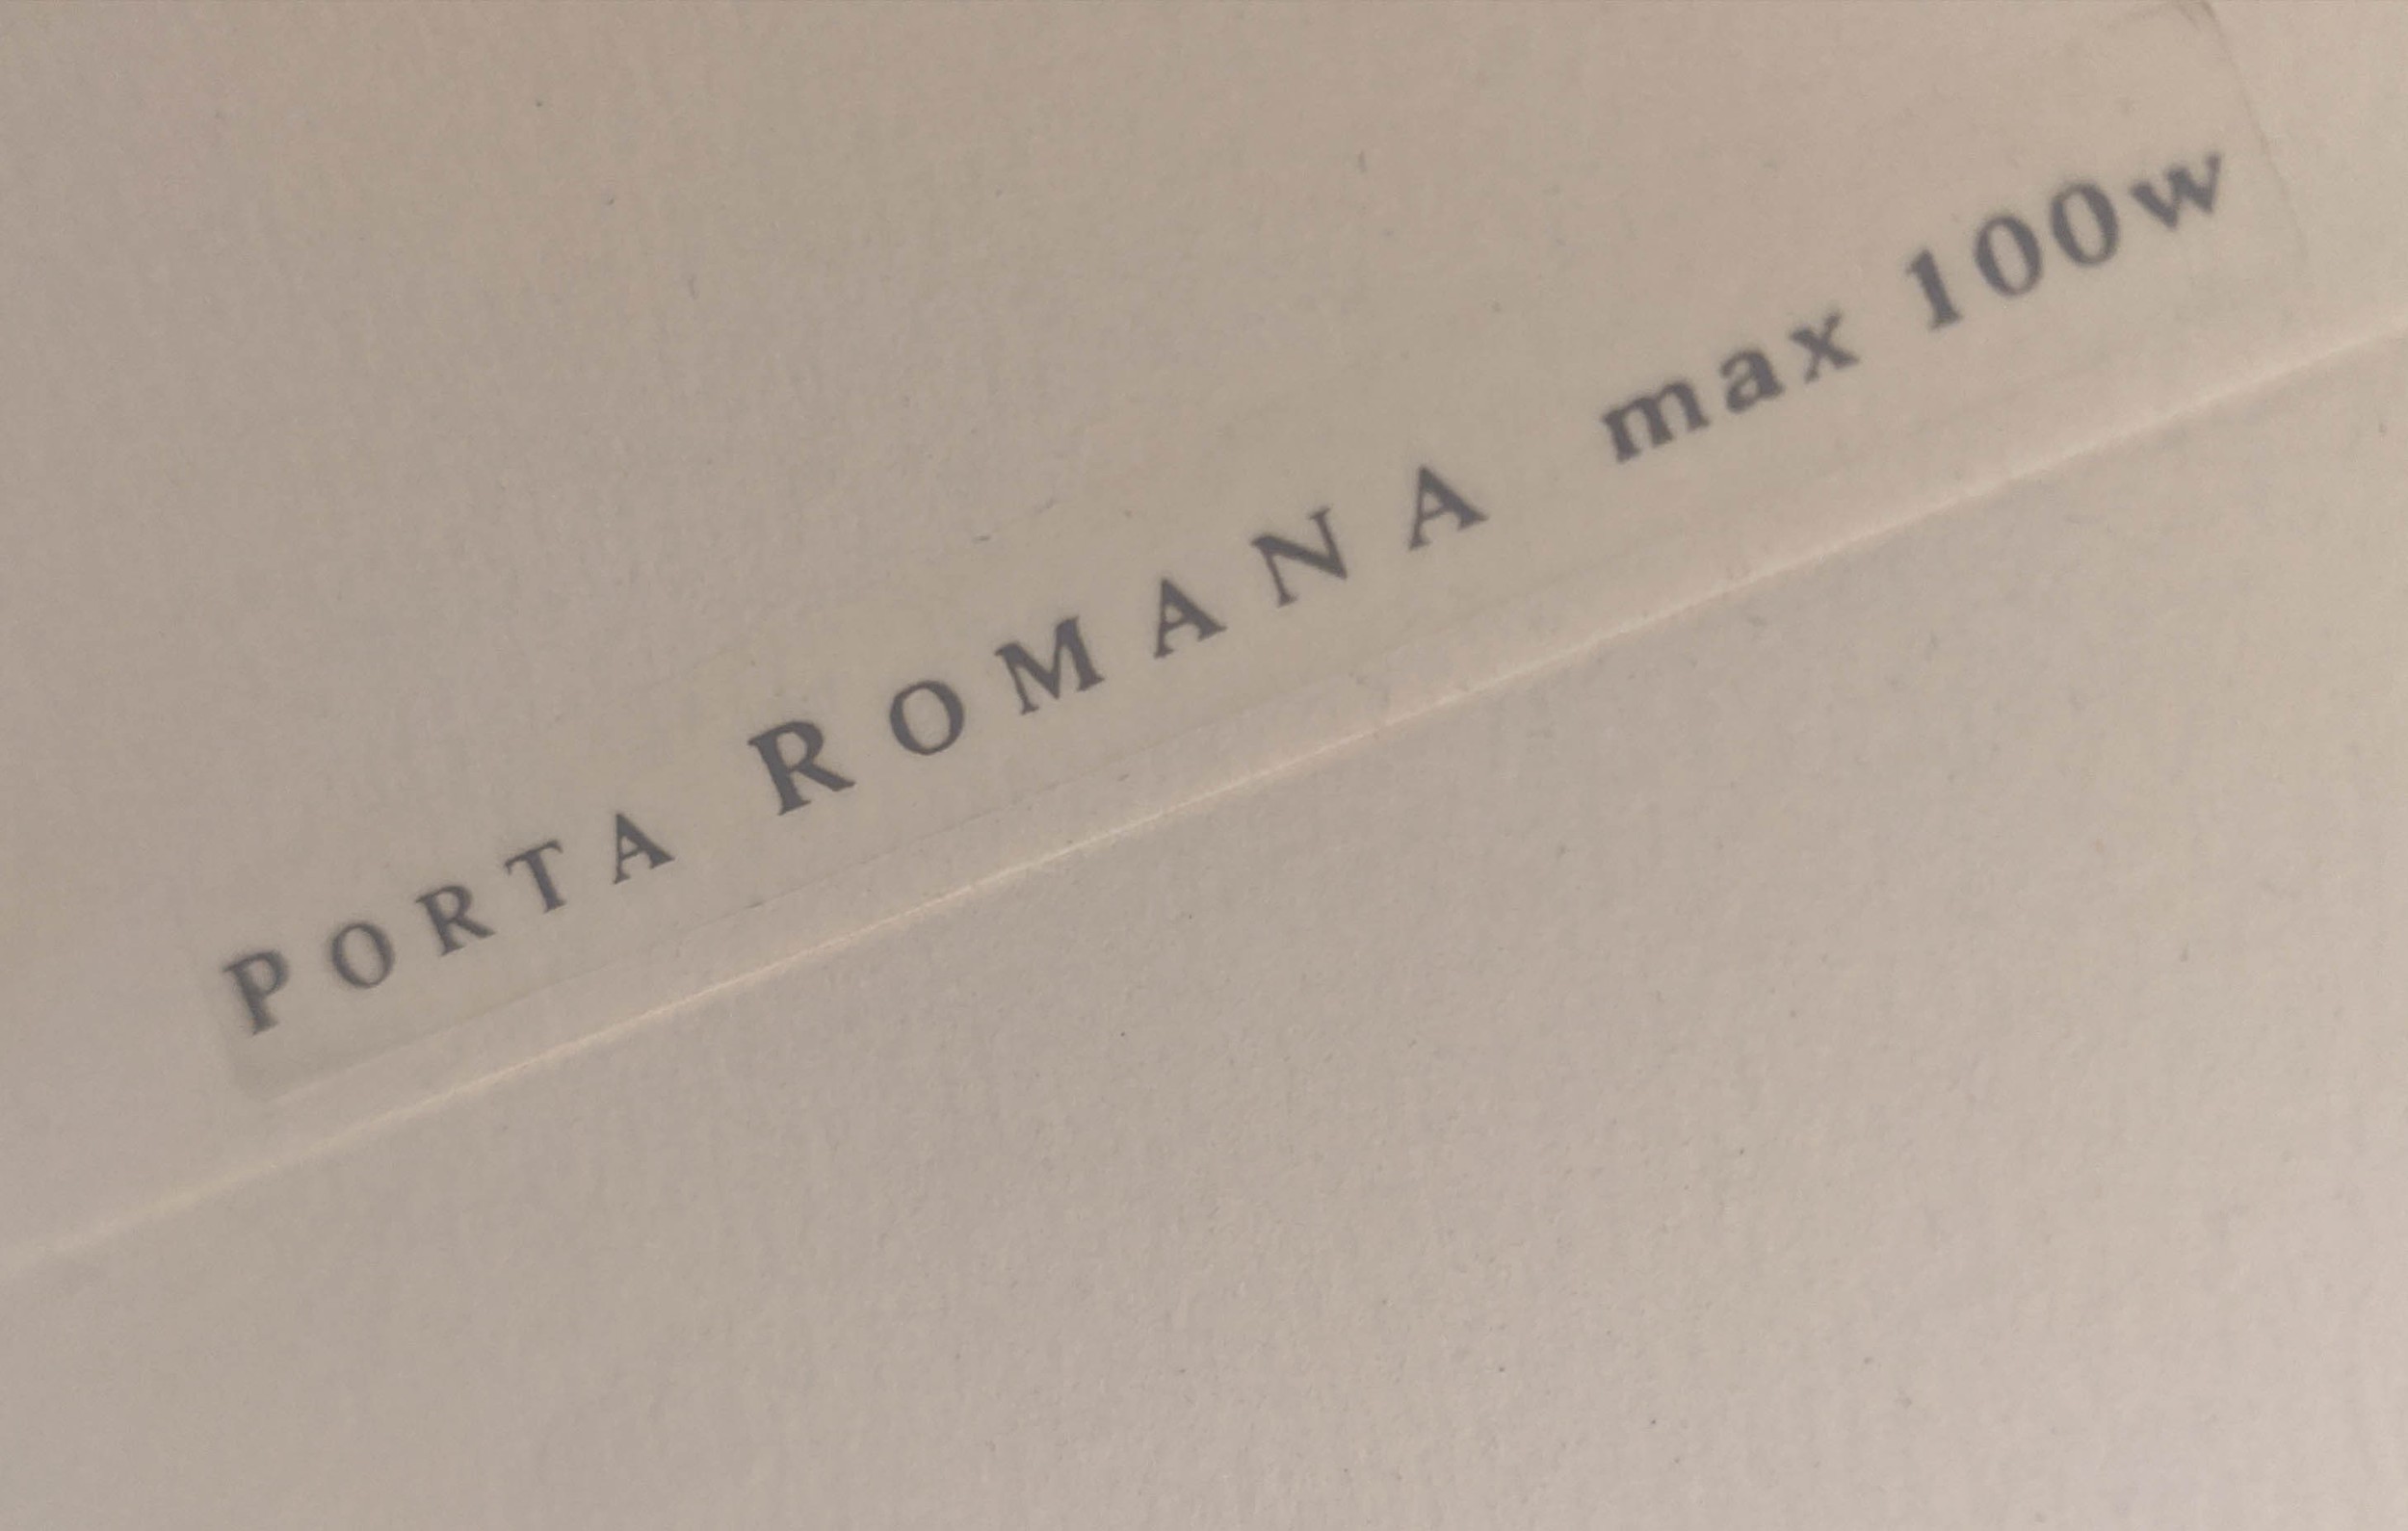 PORTA ROMANA READING FLOOR LAMP, 133cm H. - Image 6 of 6